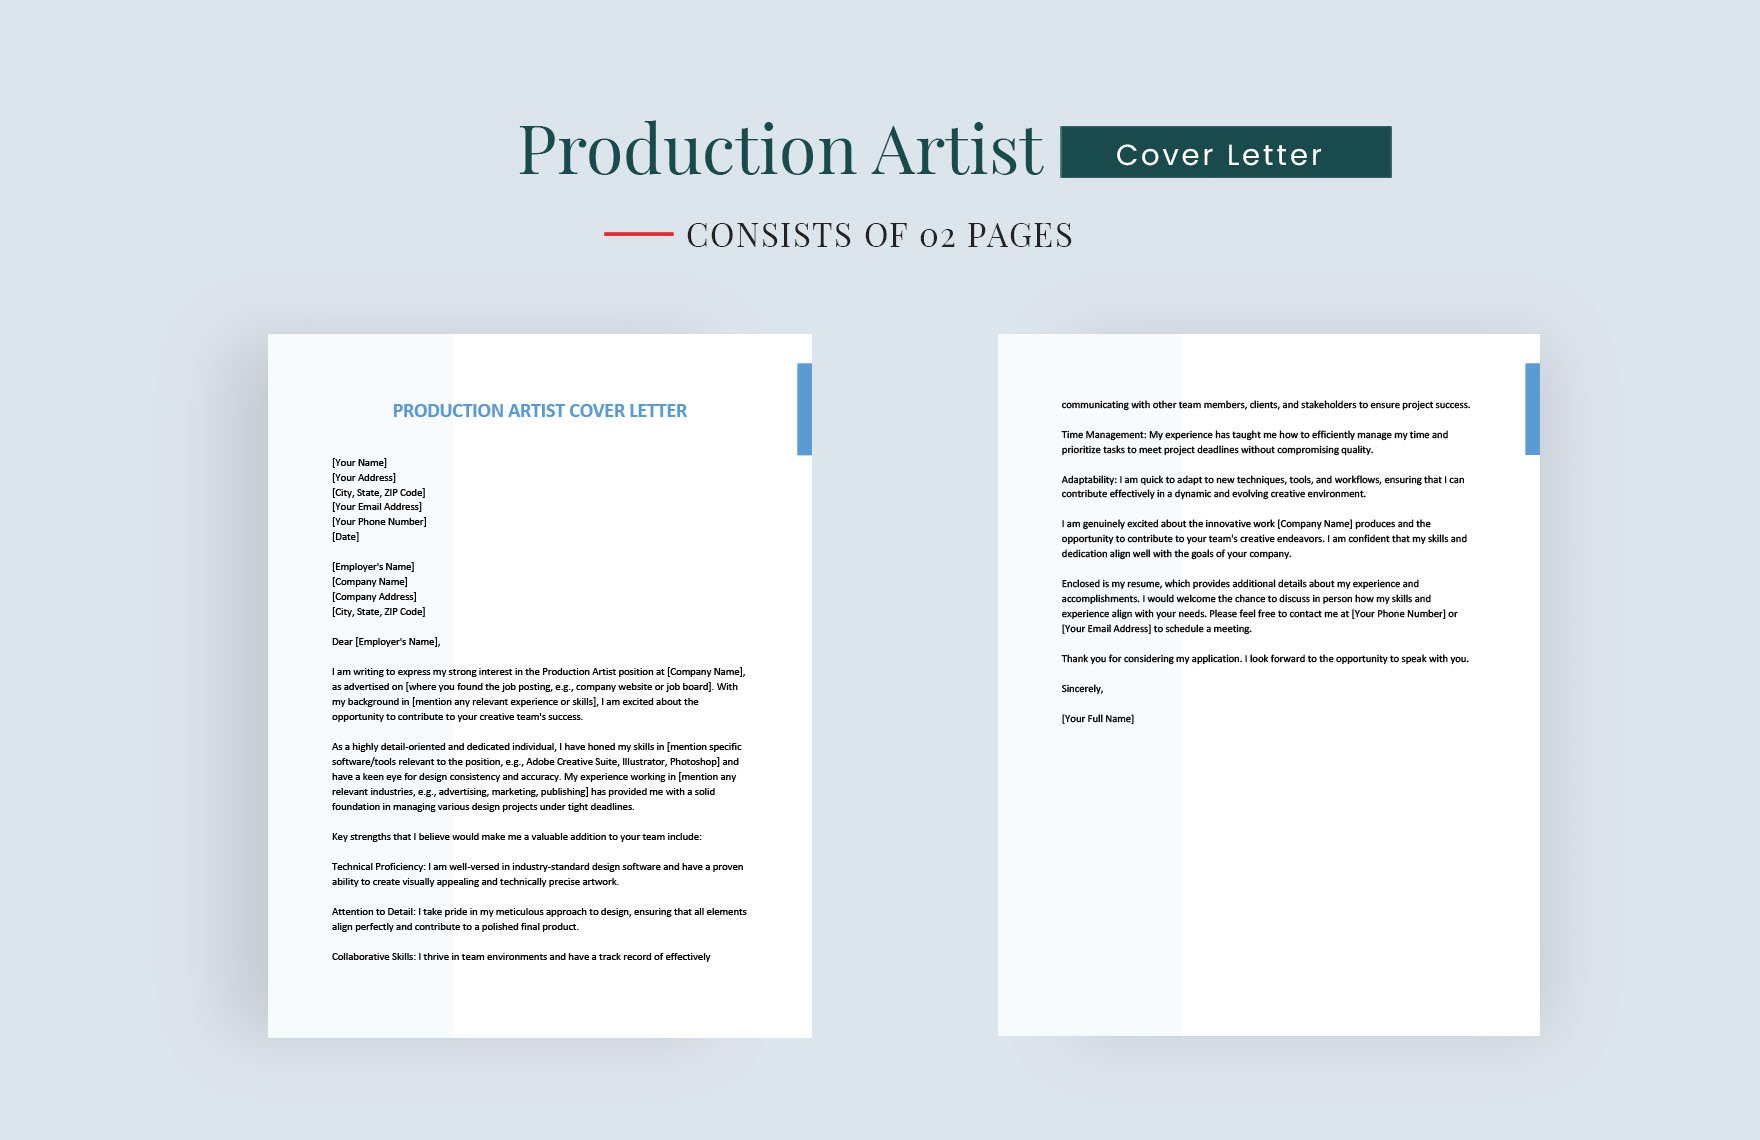 Production Artist Cover Letter